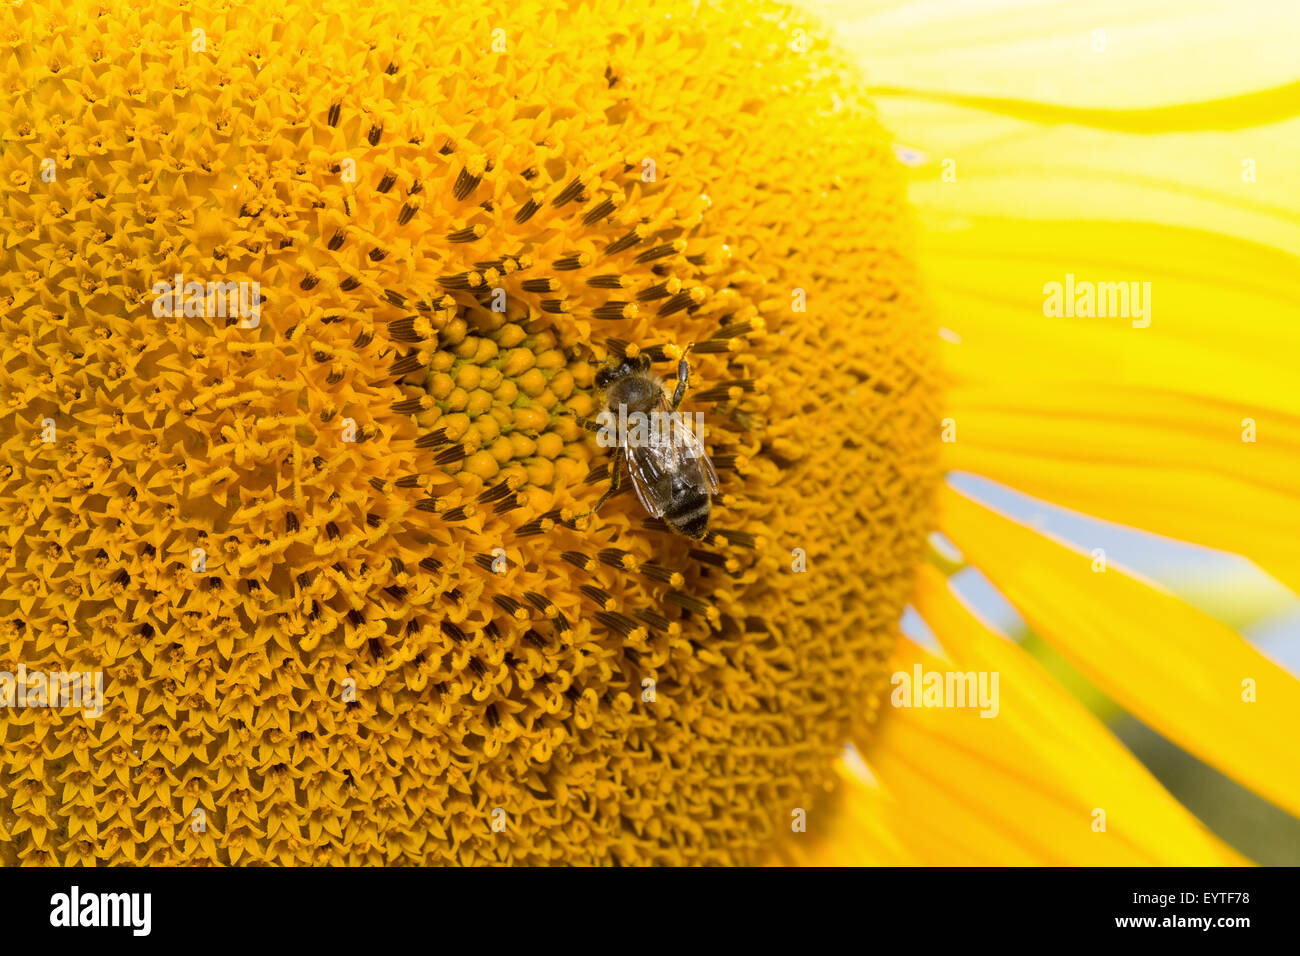 Sonnenblume mit Biene hautnah. Stockfoto